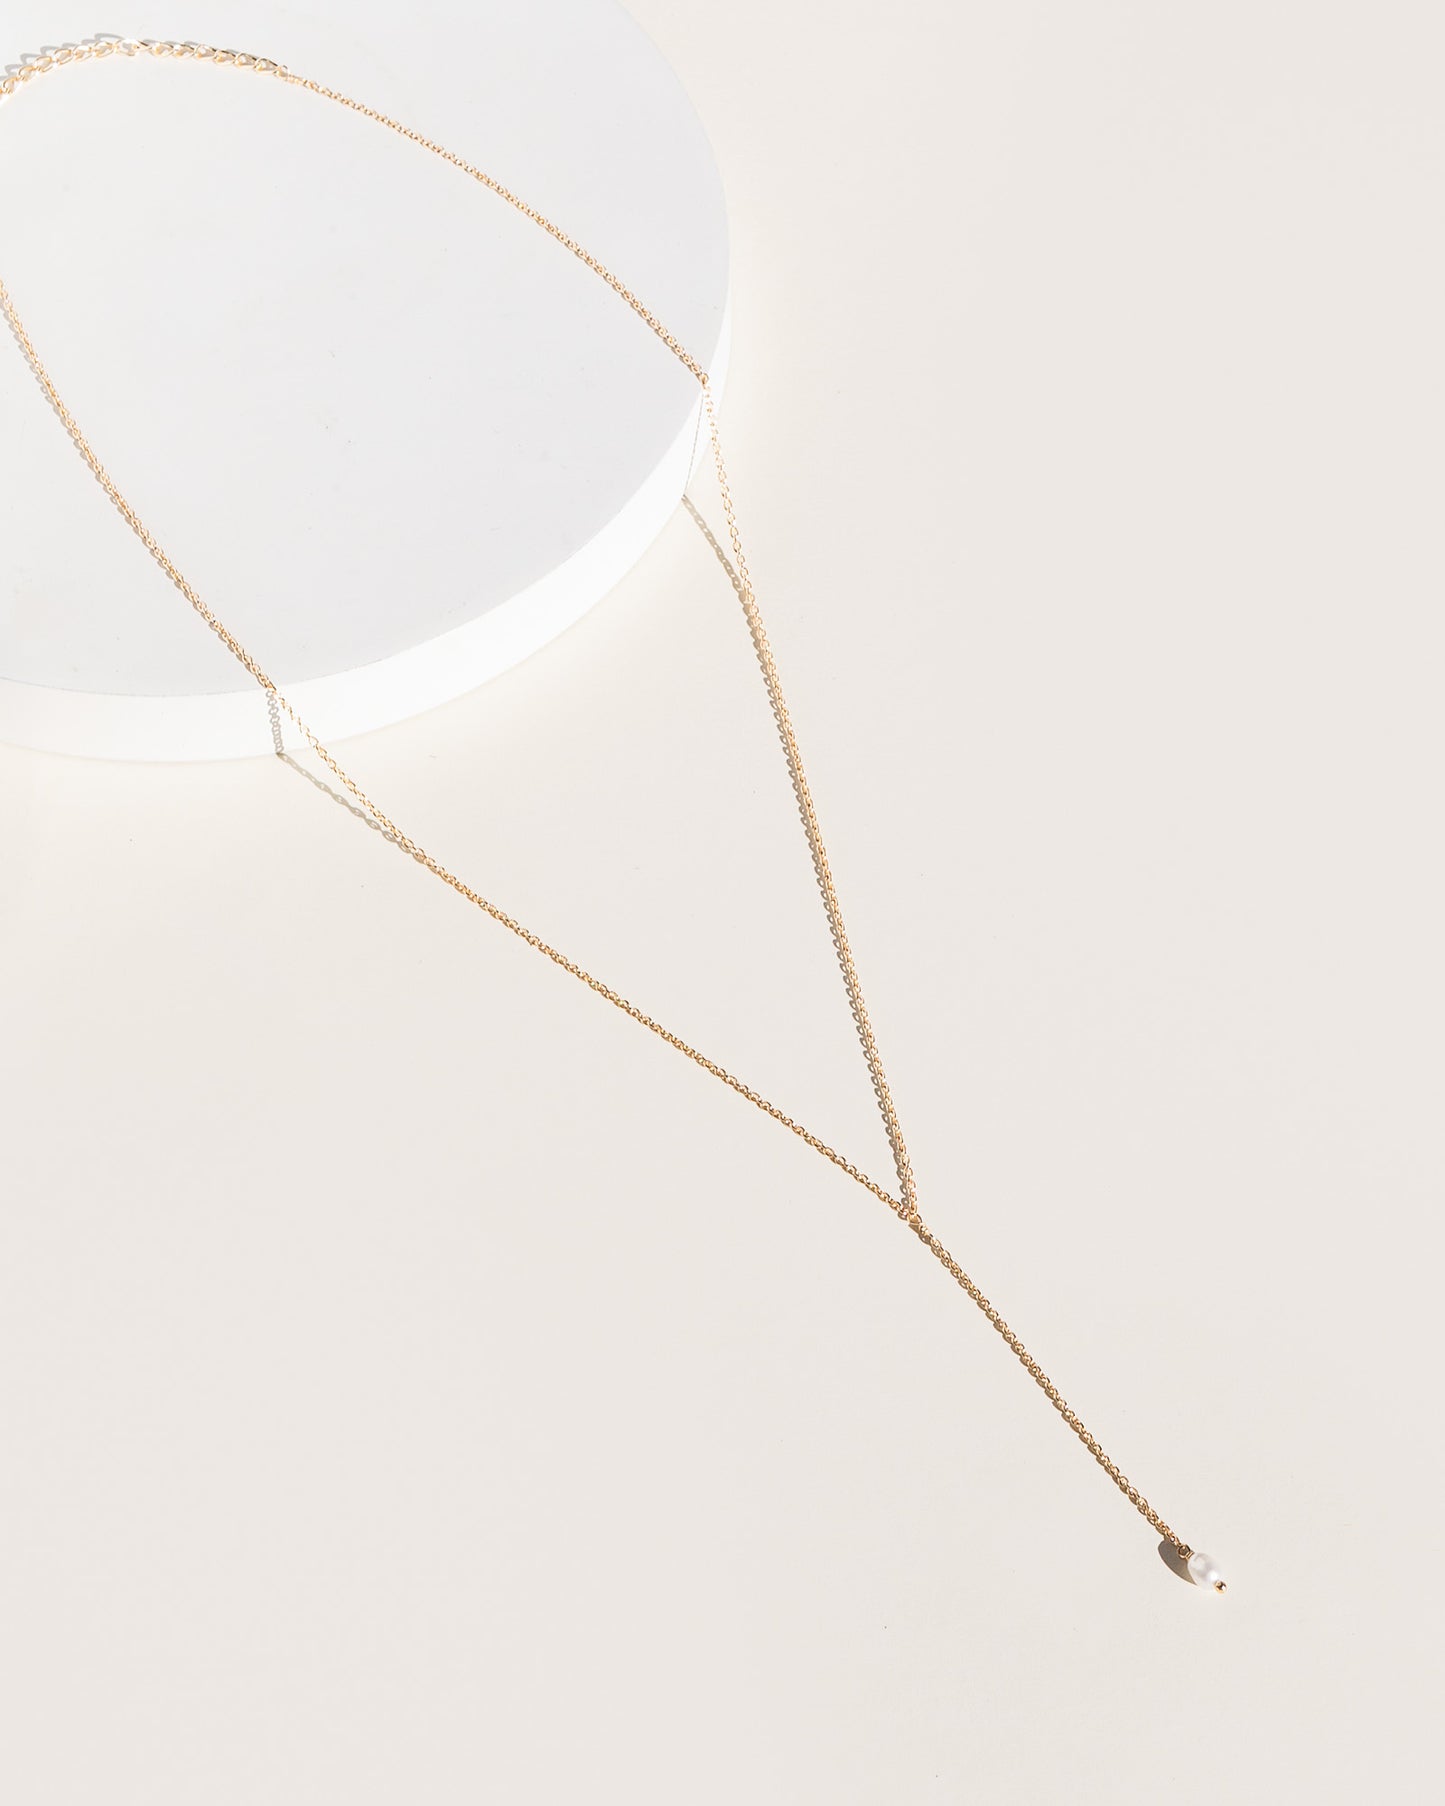 fair-trade-necklaces-pearl-lariat-necklace-1.jpg